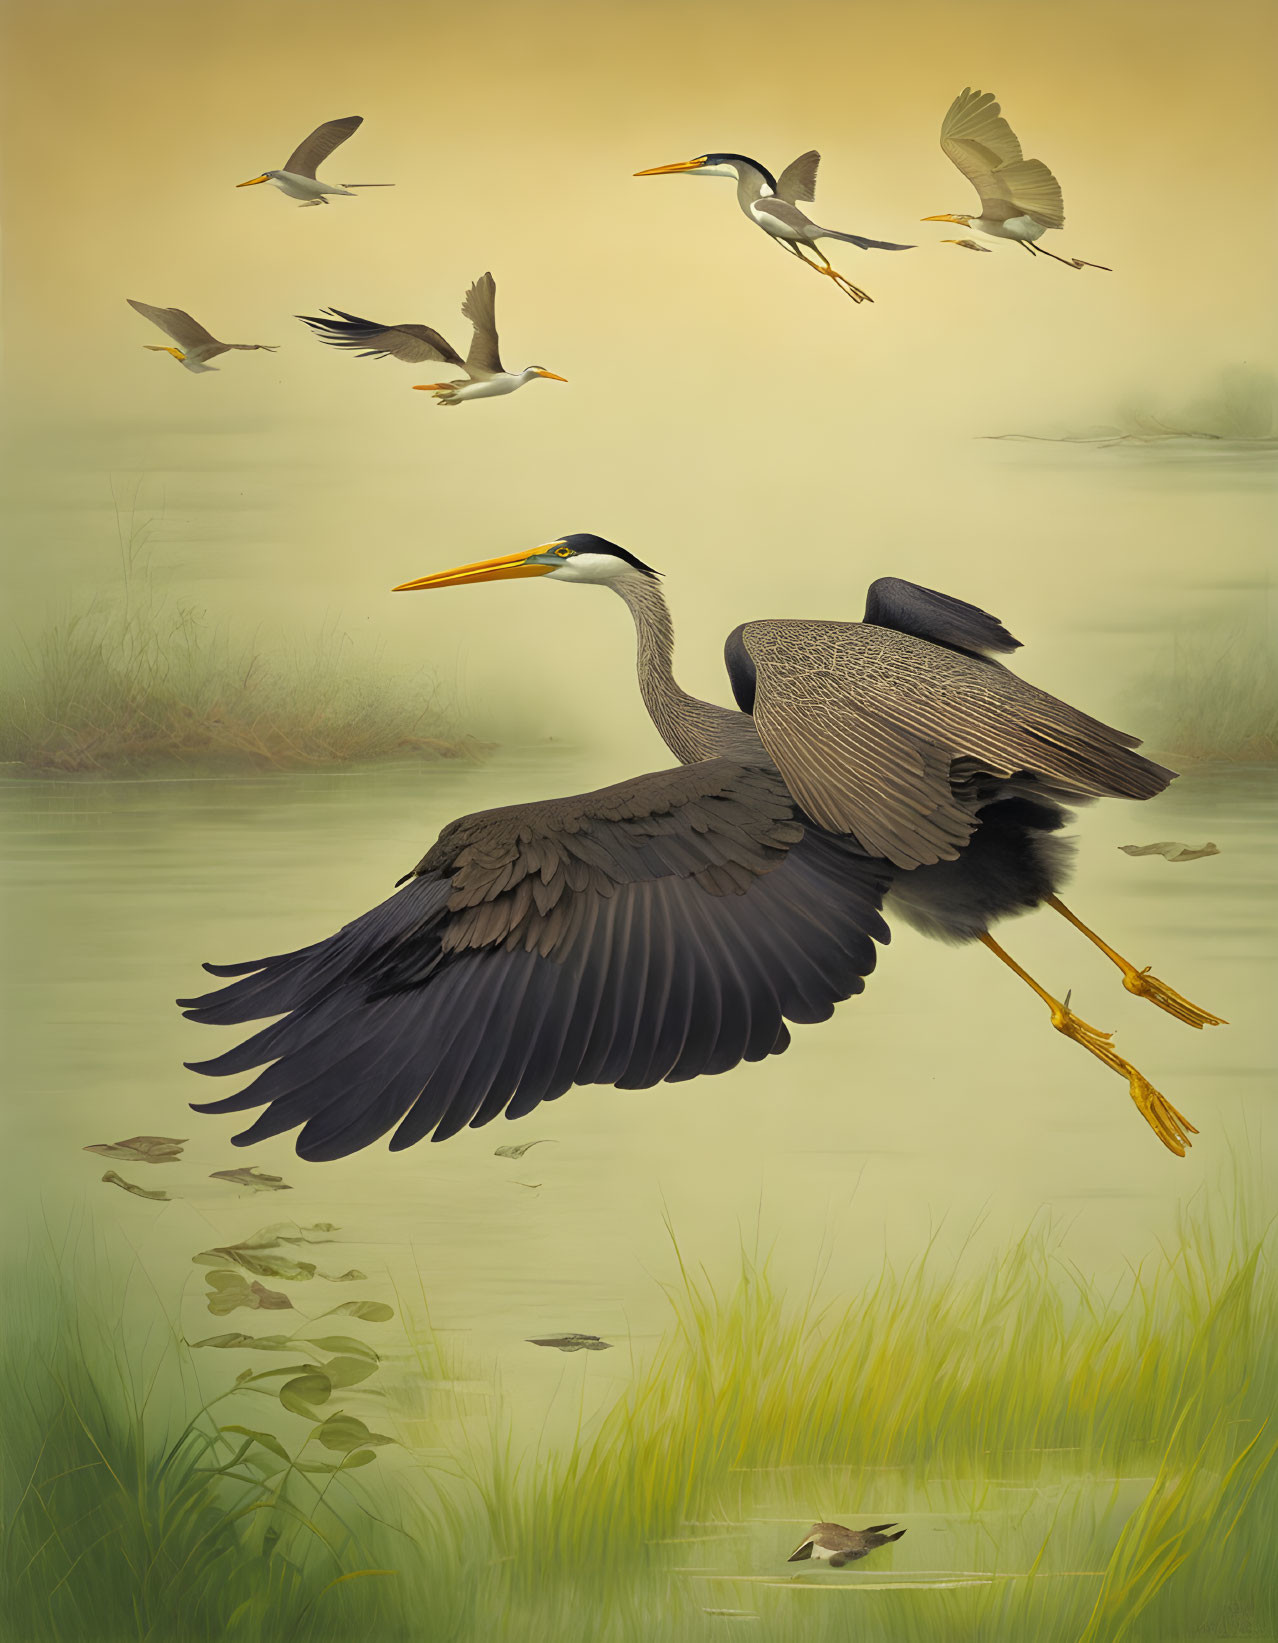 Majestic heron spreading wings in tranquil marsh scenery